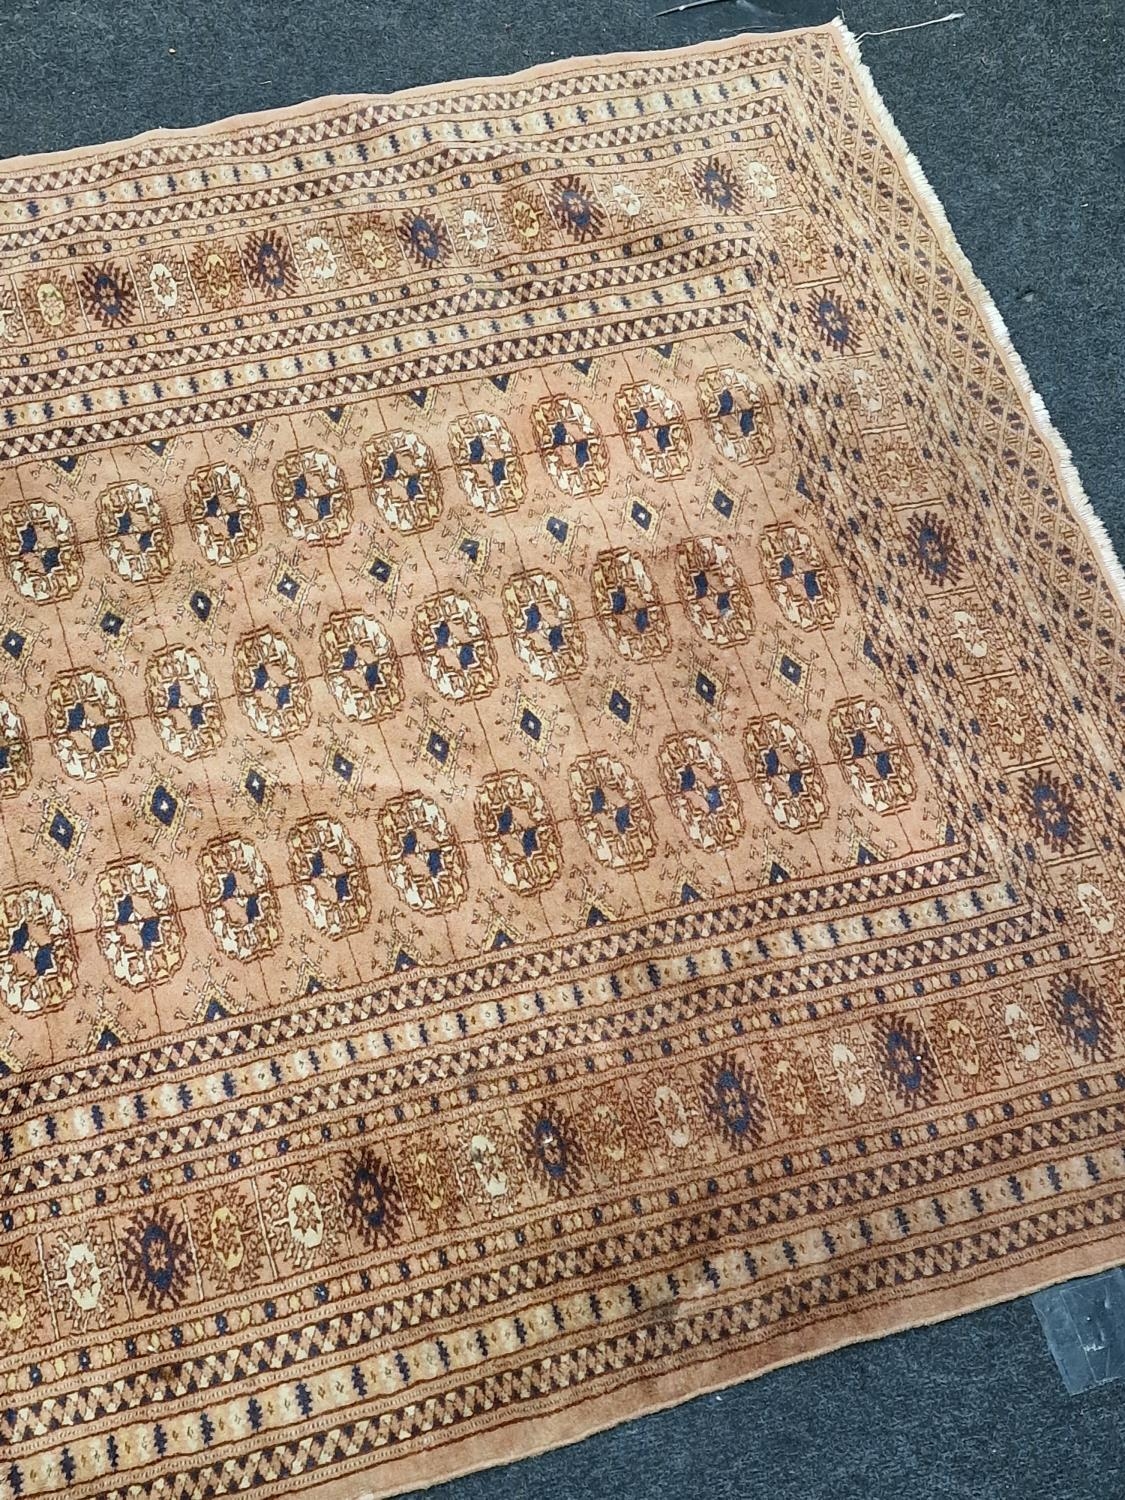 Vintage patterned carpet on brown ground 195x124cm. - Image 3 of 4